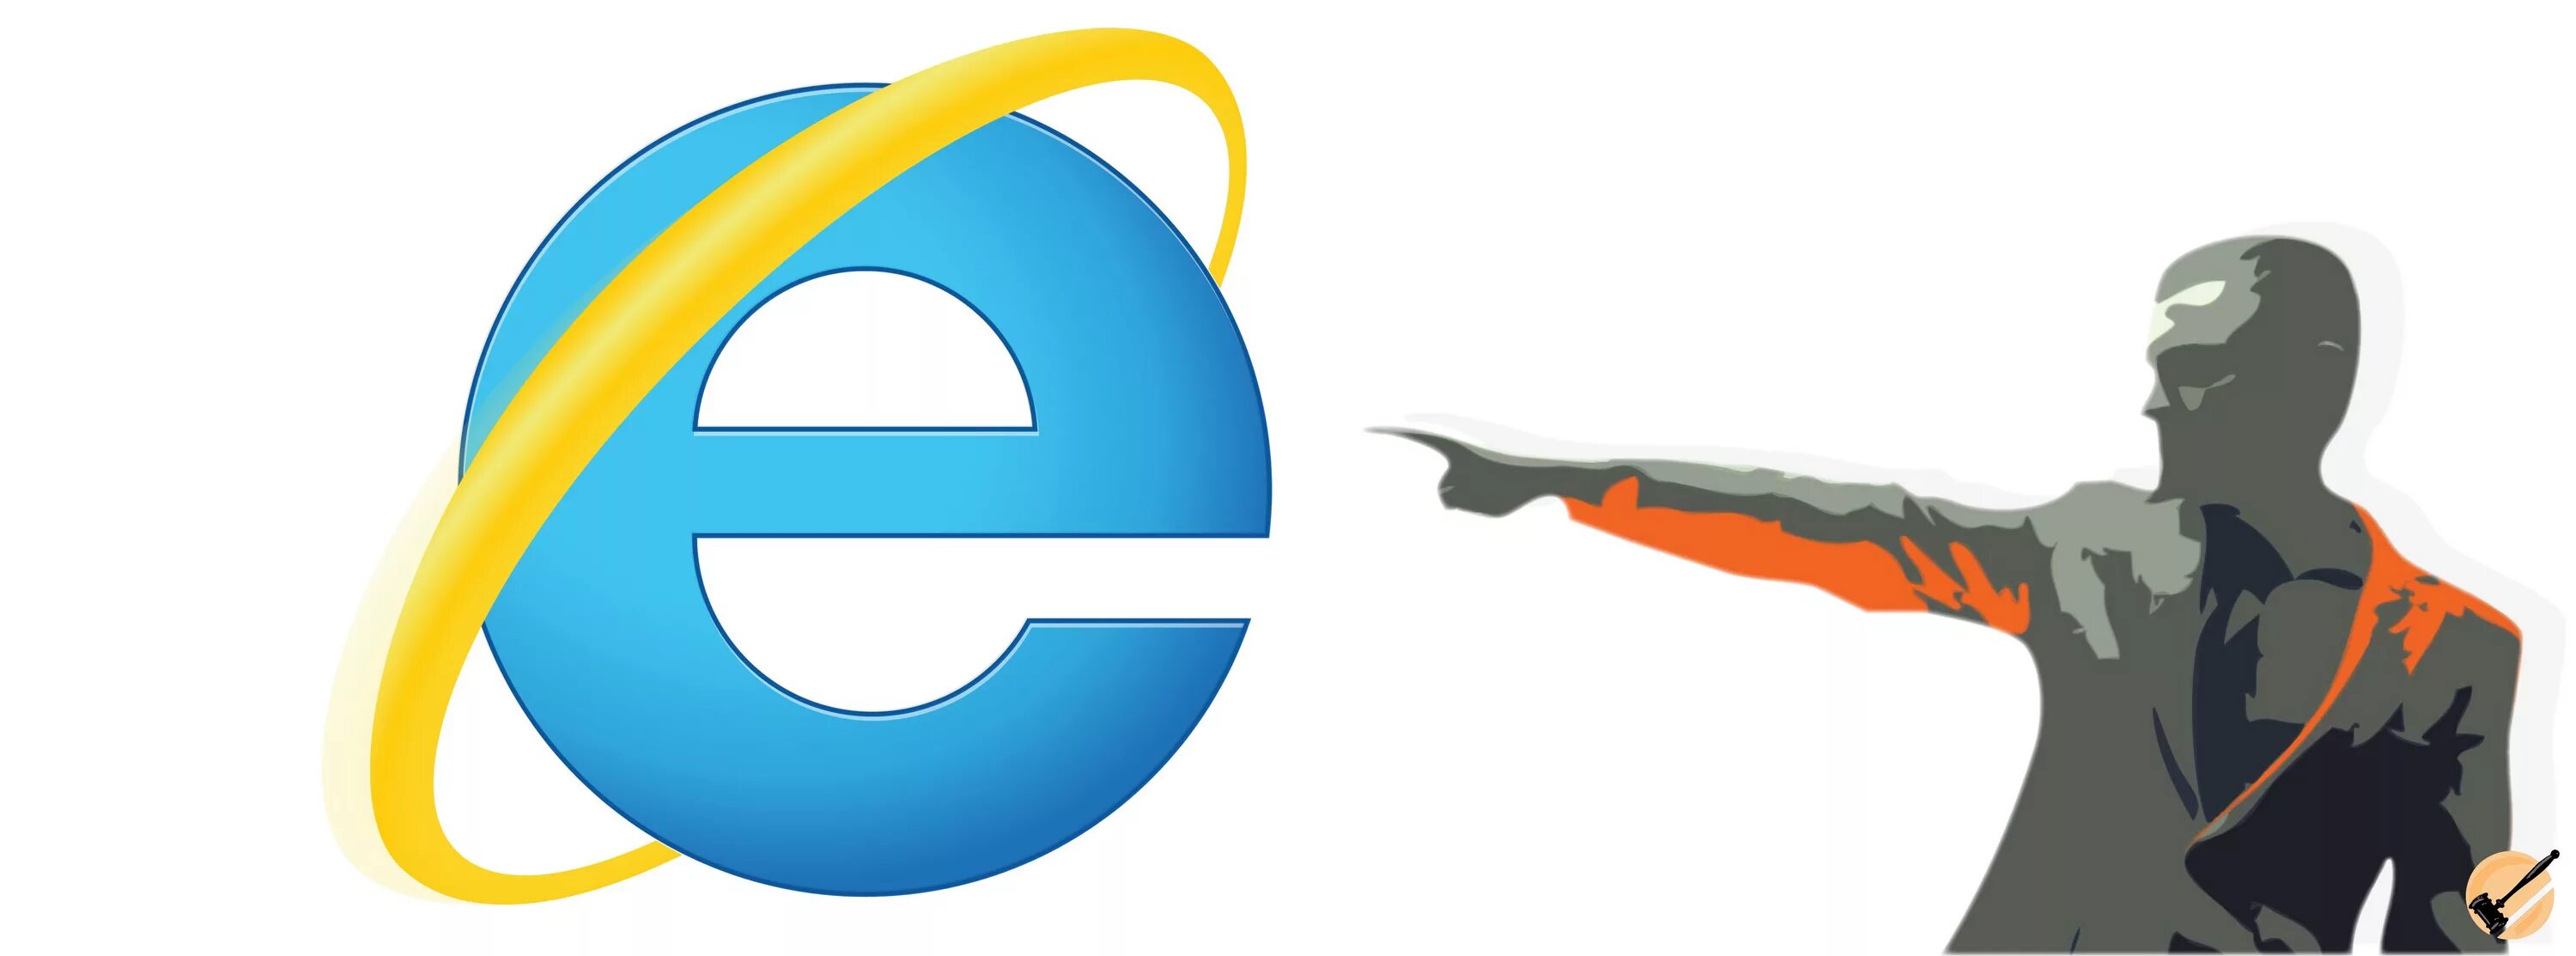 Вместо интернет эксплорер. Internet Explorer картинки. Значок интернет эксплорер. Интернет эксплорер перечеркнут. Интернет эксплорер первый логотип.